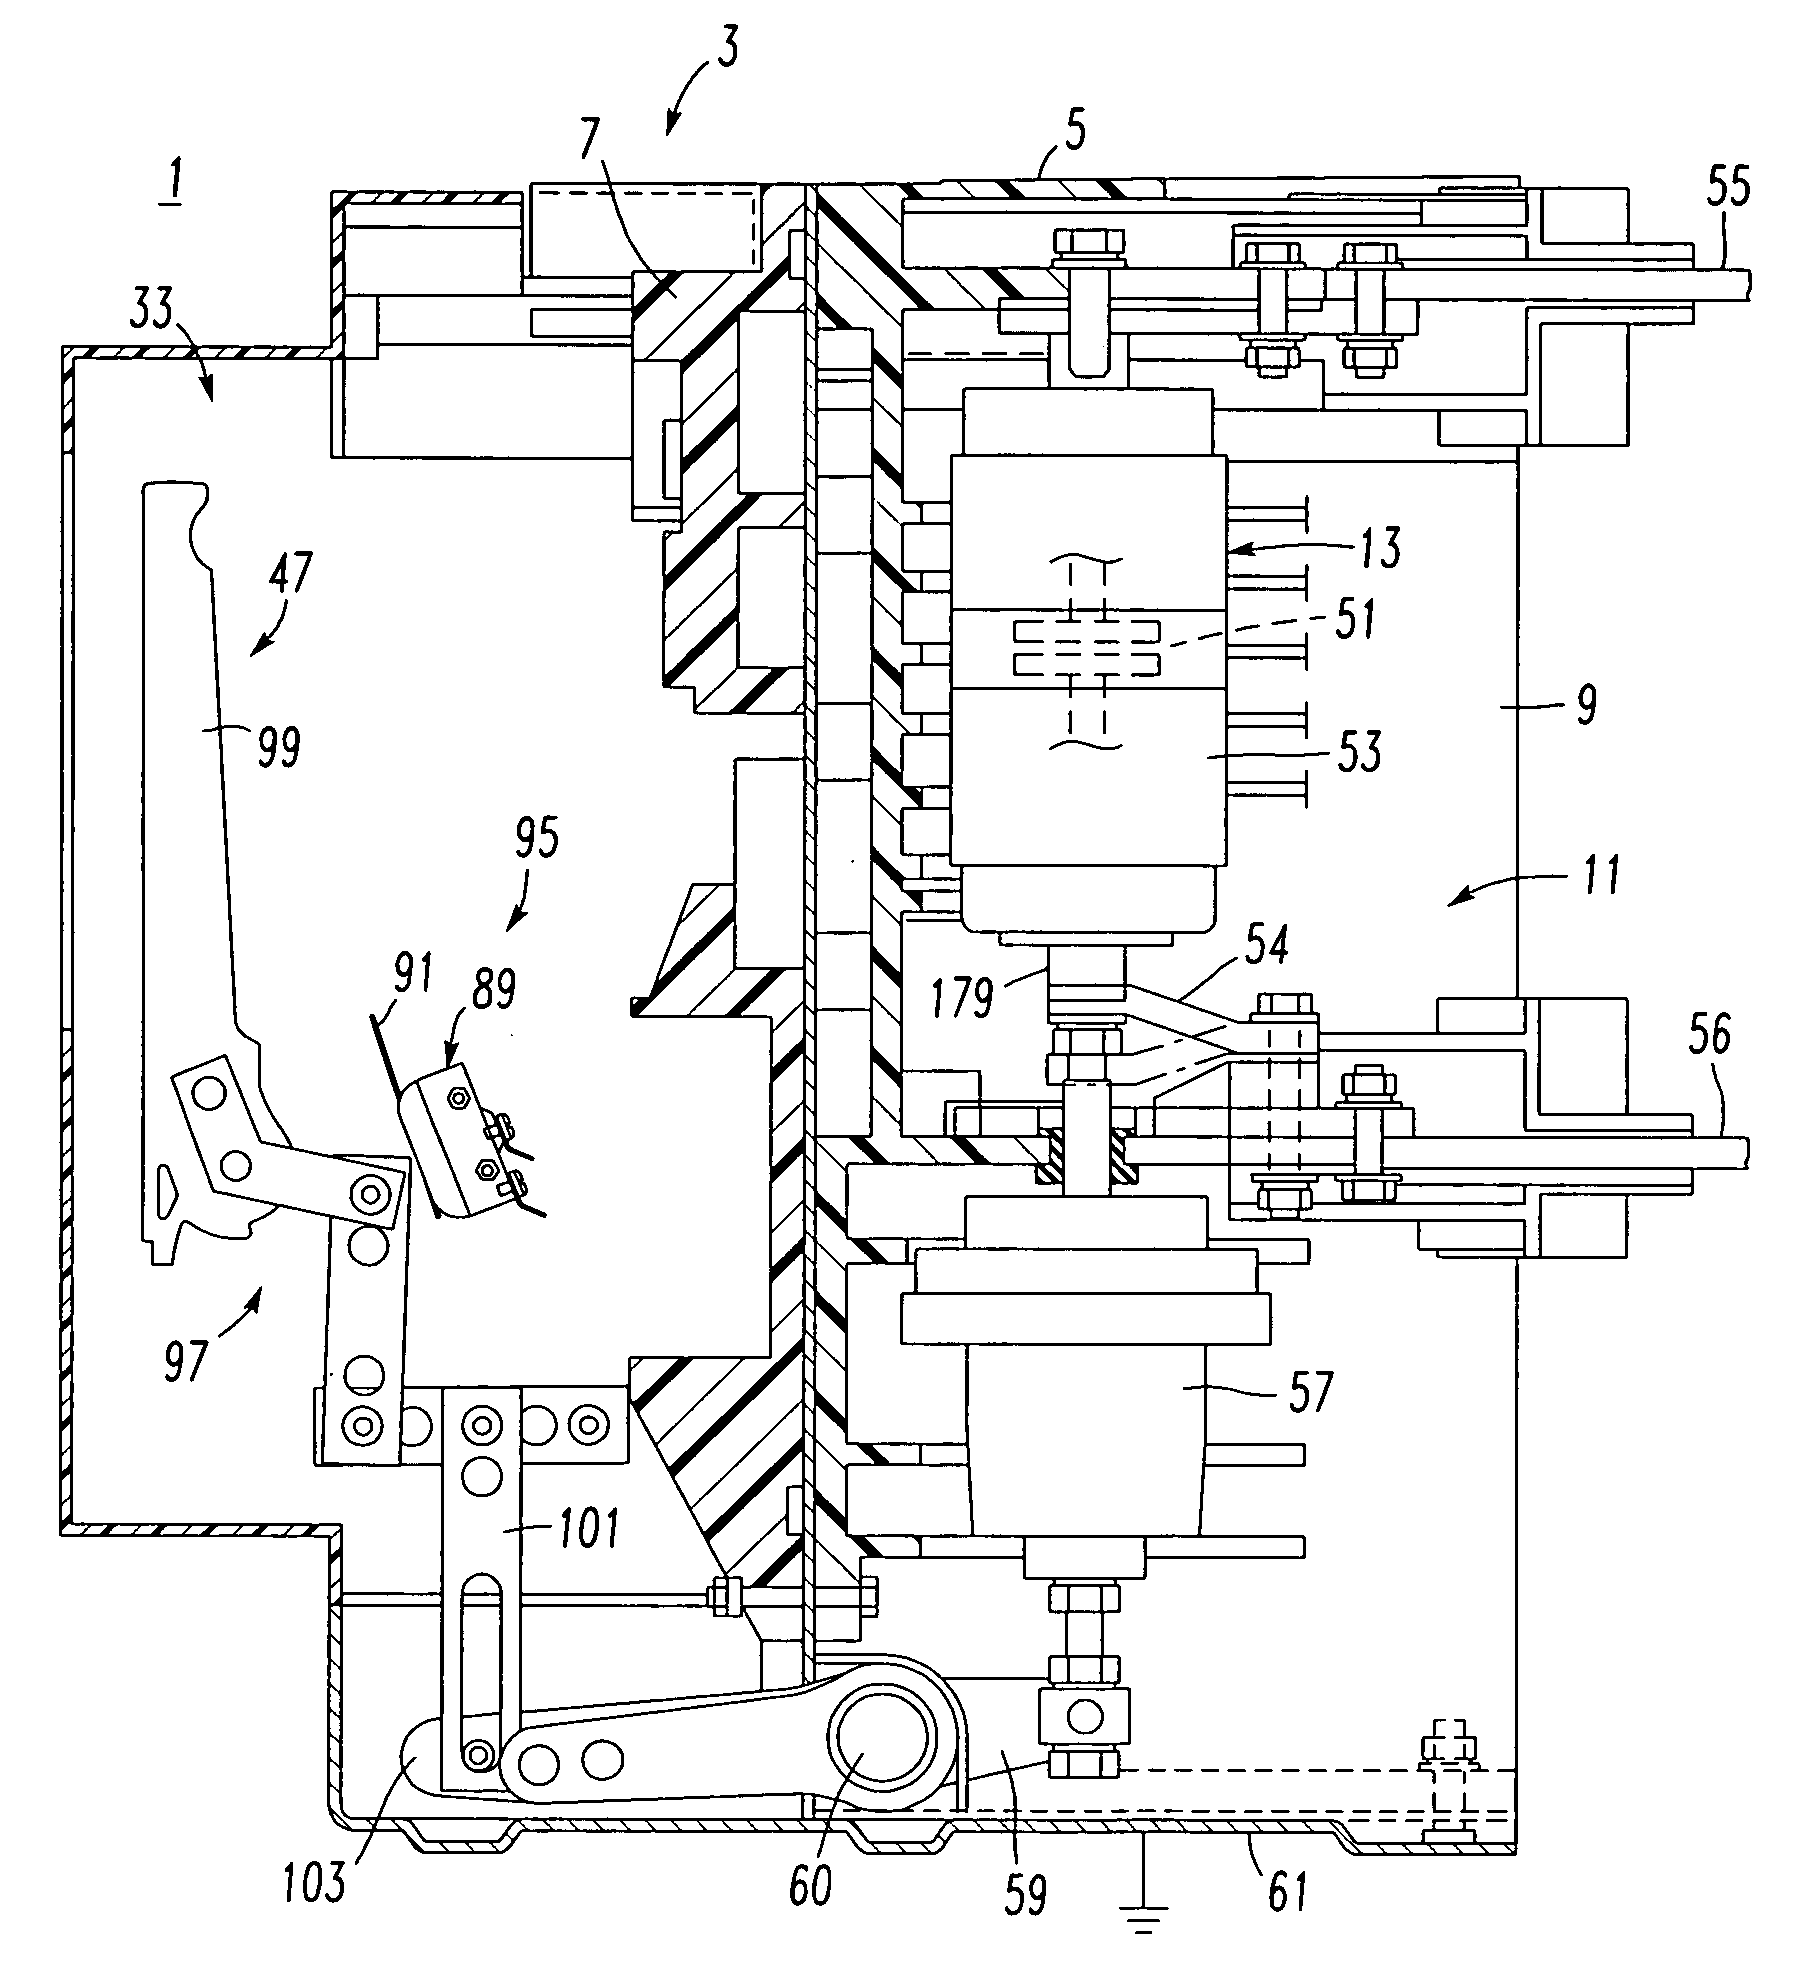 Circuit interrupter including linear actuator and manual pivot member